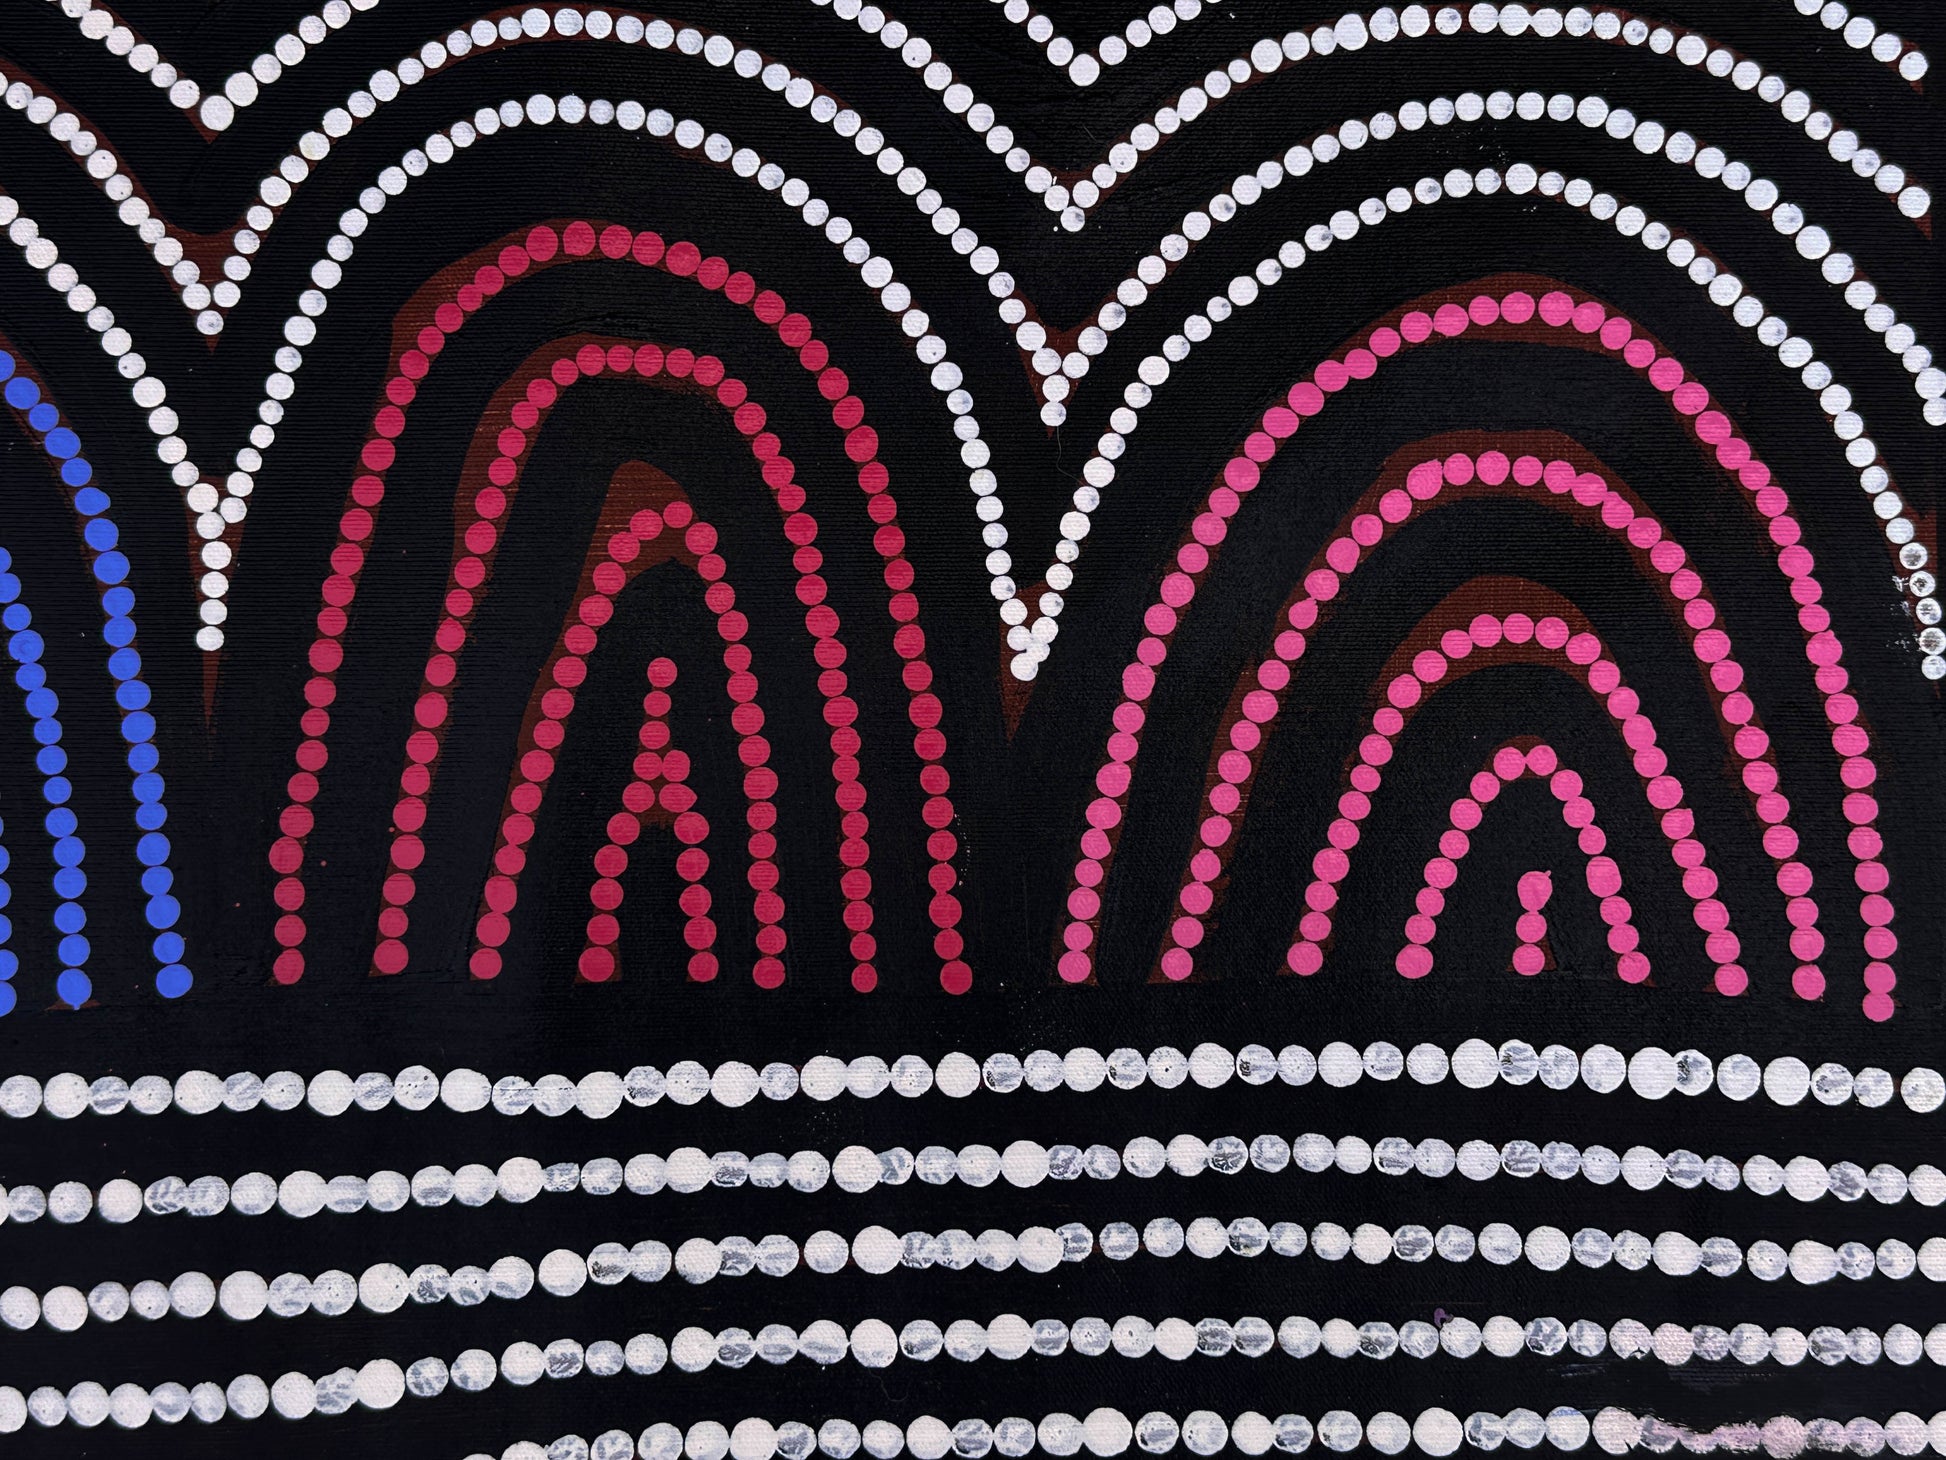 Vicky Jackson + Papunya + Dot art work + Dot painting + Painting for sale + art for sale + blue + yellow + orange + indigenous art + aboriginal art + australian art + darwin based gallery + family business + altyerre + altyerre aboriginal art